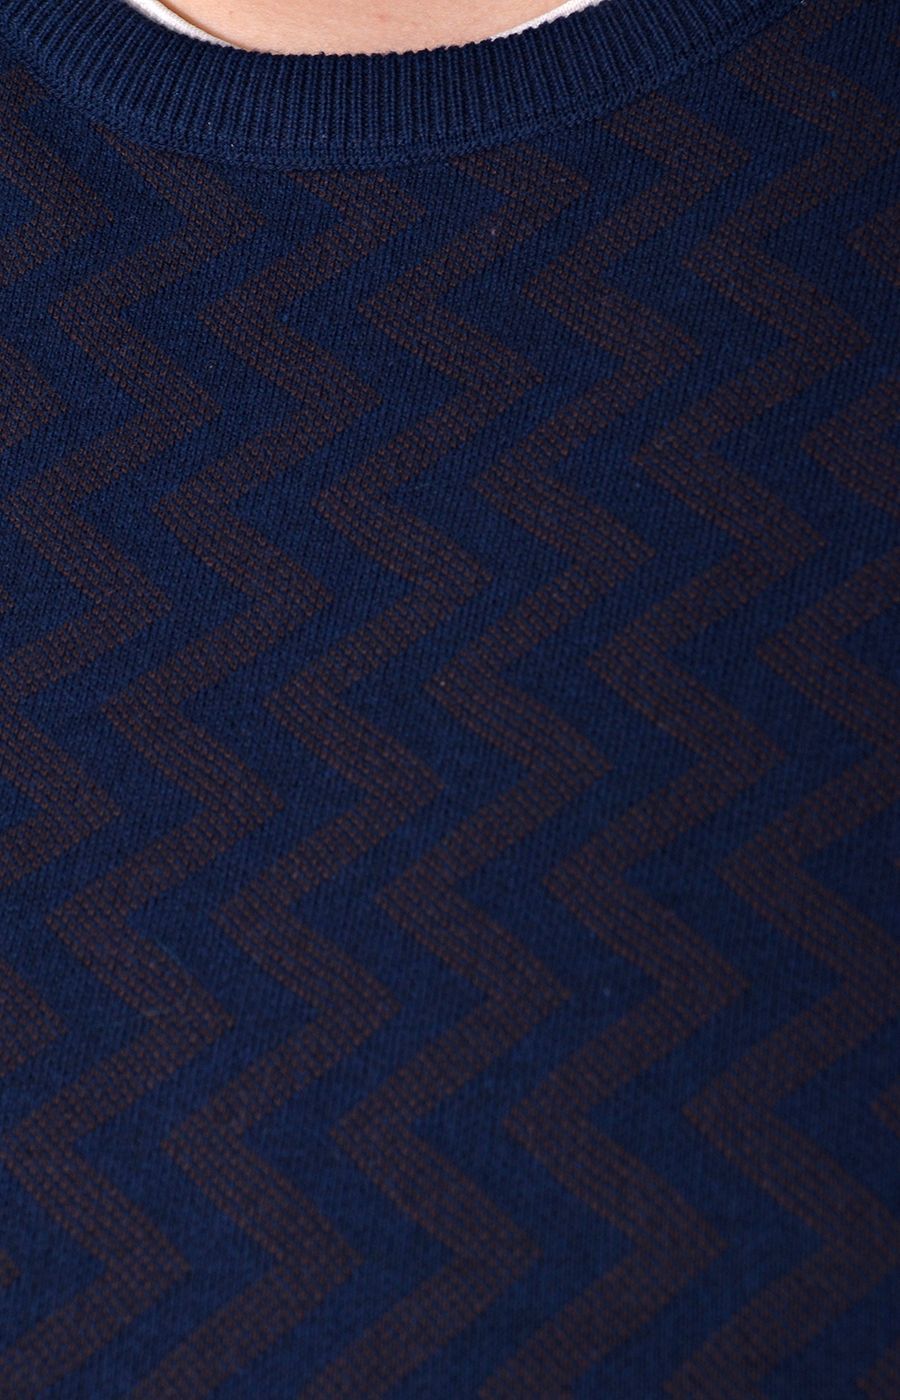 Джемпер узор ёлочка темно-синий большого размера